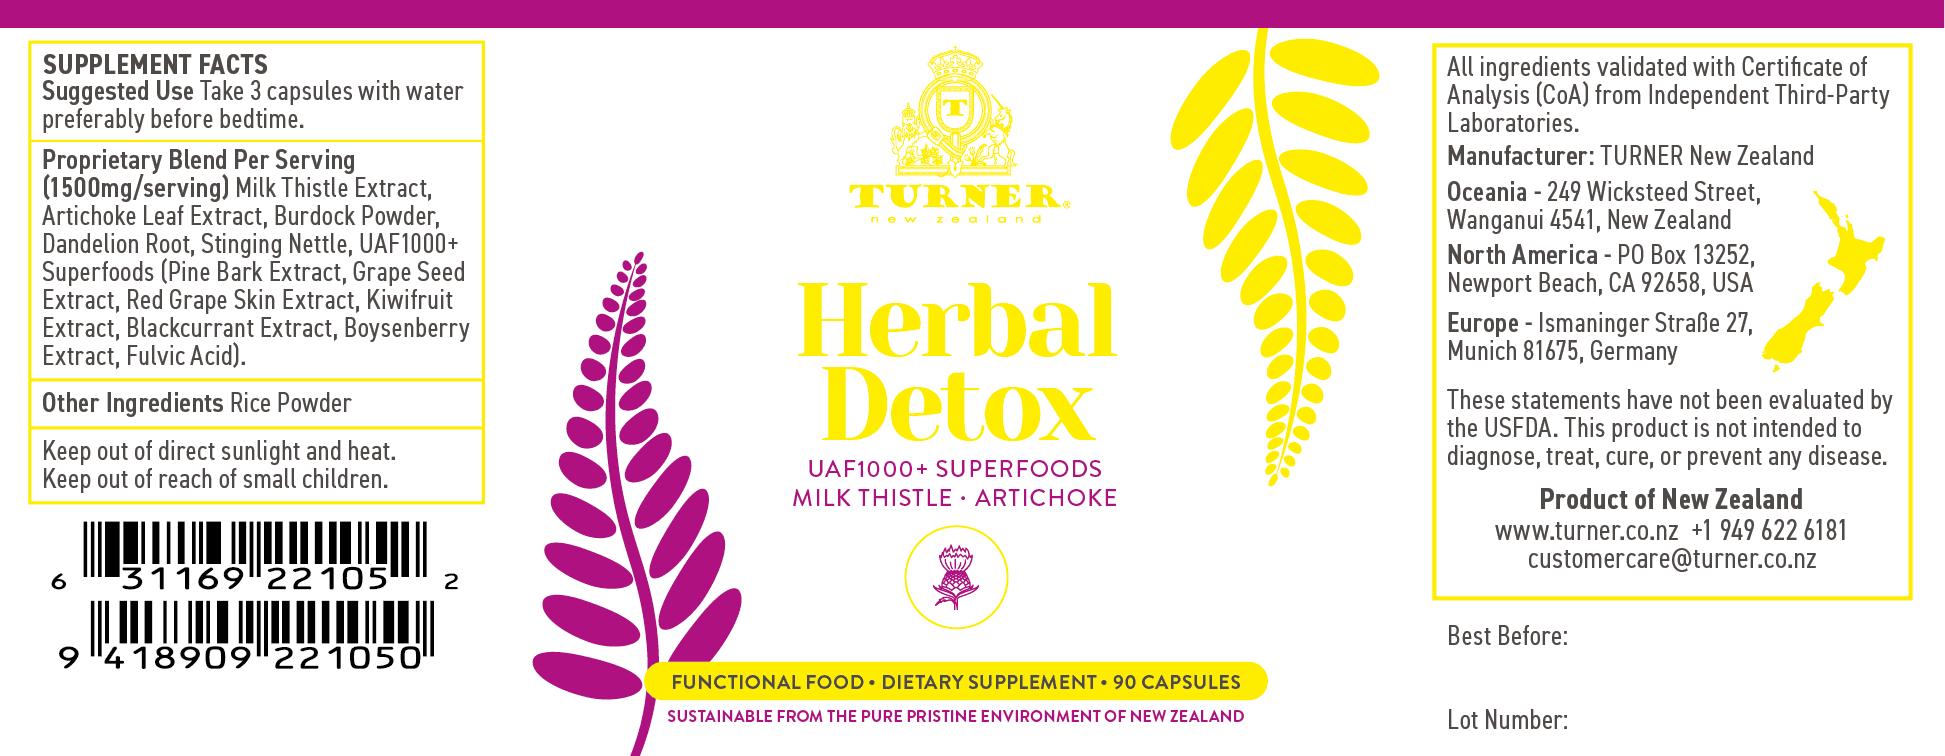 Herbal Detox, TURNER New Zealand, 